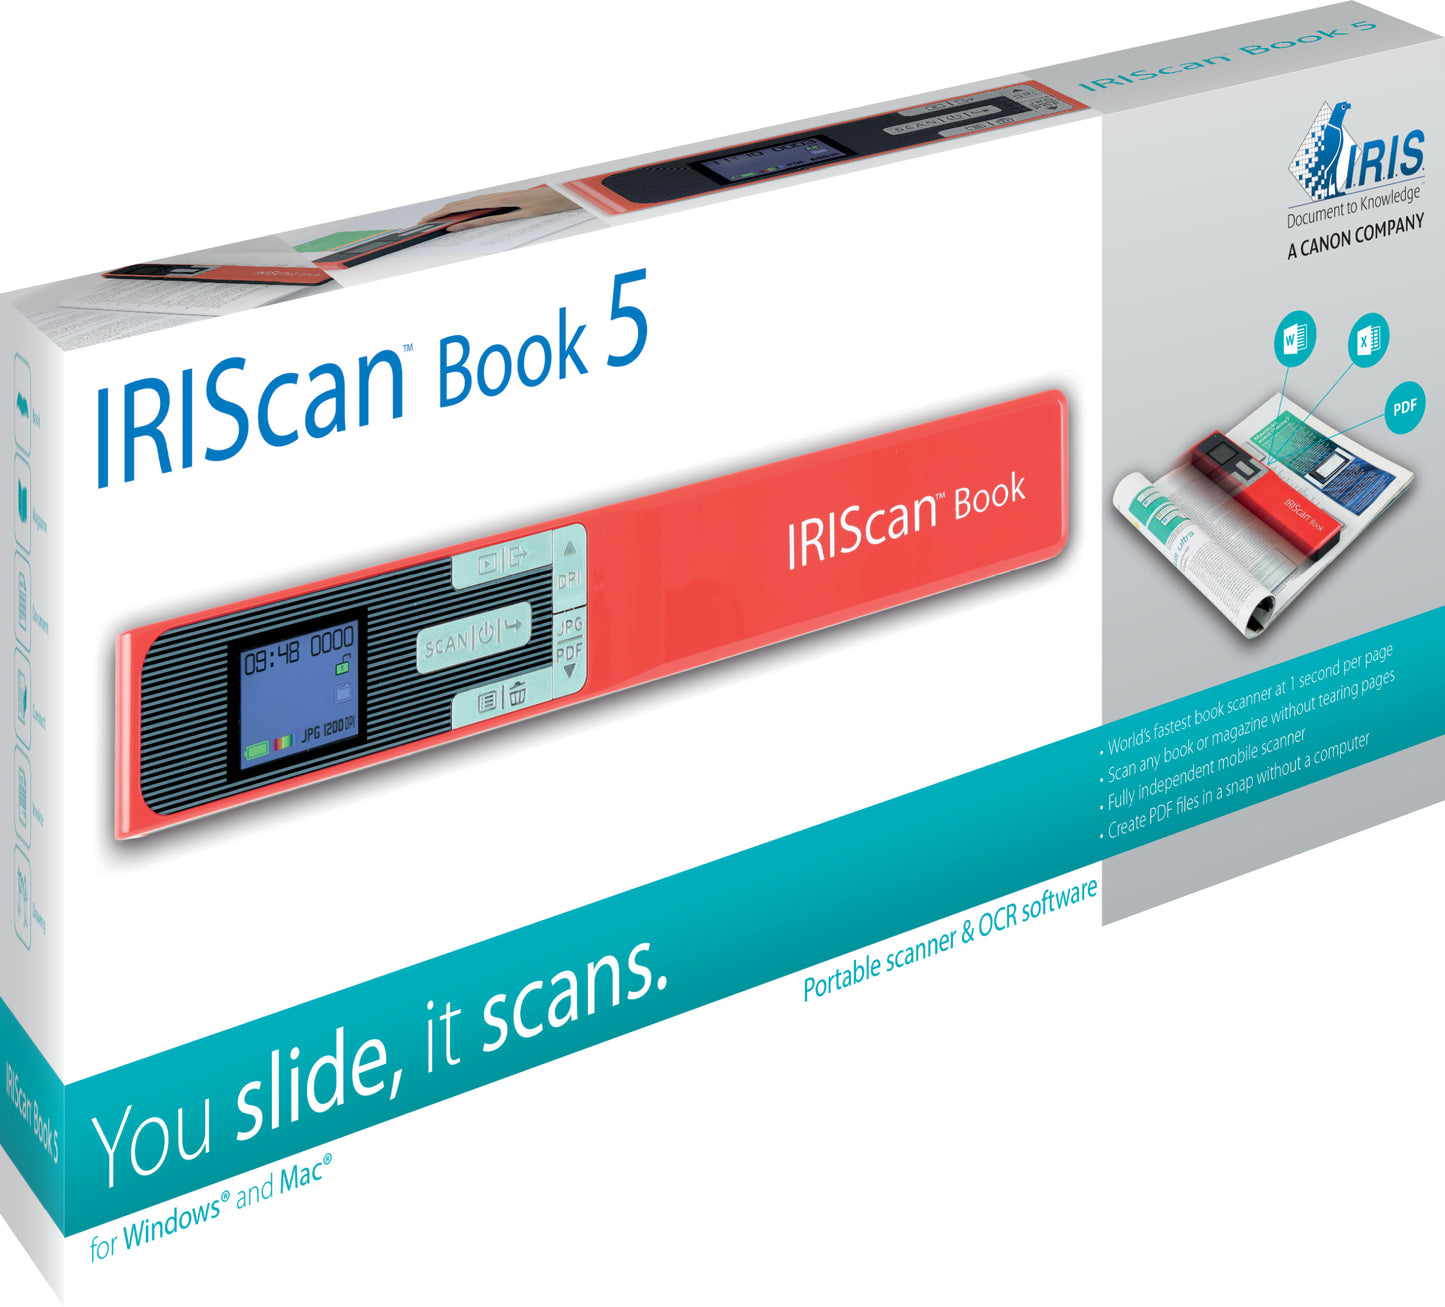 IRIS ESCANER IRISCAN BOOK 5 WHITE PERP 30 PPM WIN / MAC ISCB4-0001553 Scanner I.R.I.S. IRIScan Book 5, Escáner Color, USB, Blanco 30 PPM WIN / MAC ISCB4-0001553